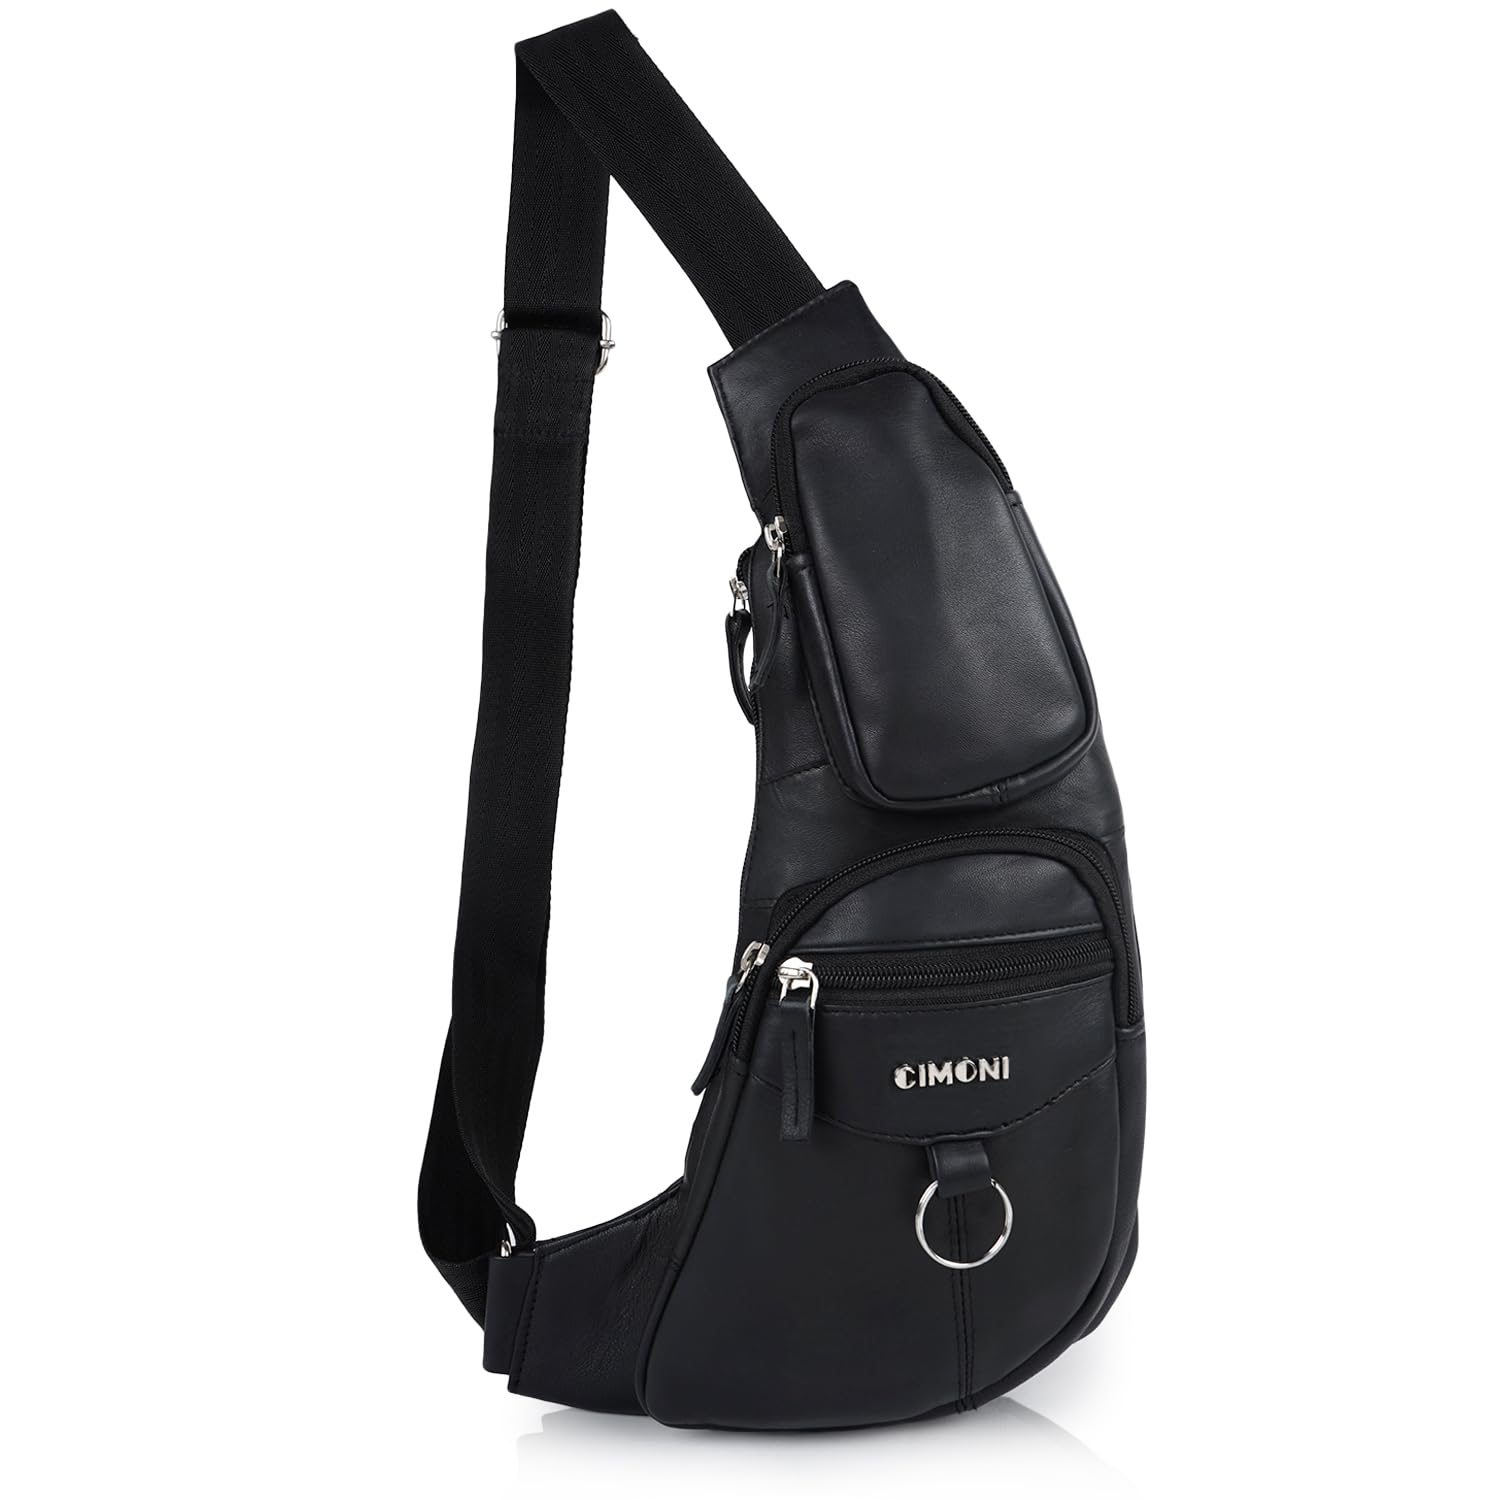 CIMONI® Premium Genuine Leather Sling Bag Classy Trendy Crossbody Bag Shoulder Daytrip Travel Stylish Purse With Adjustable Straps (Color - Black)